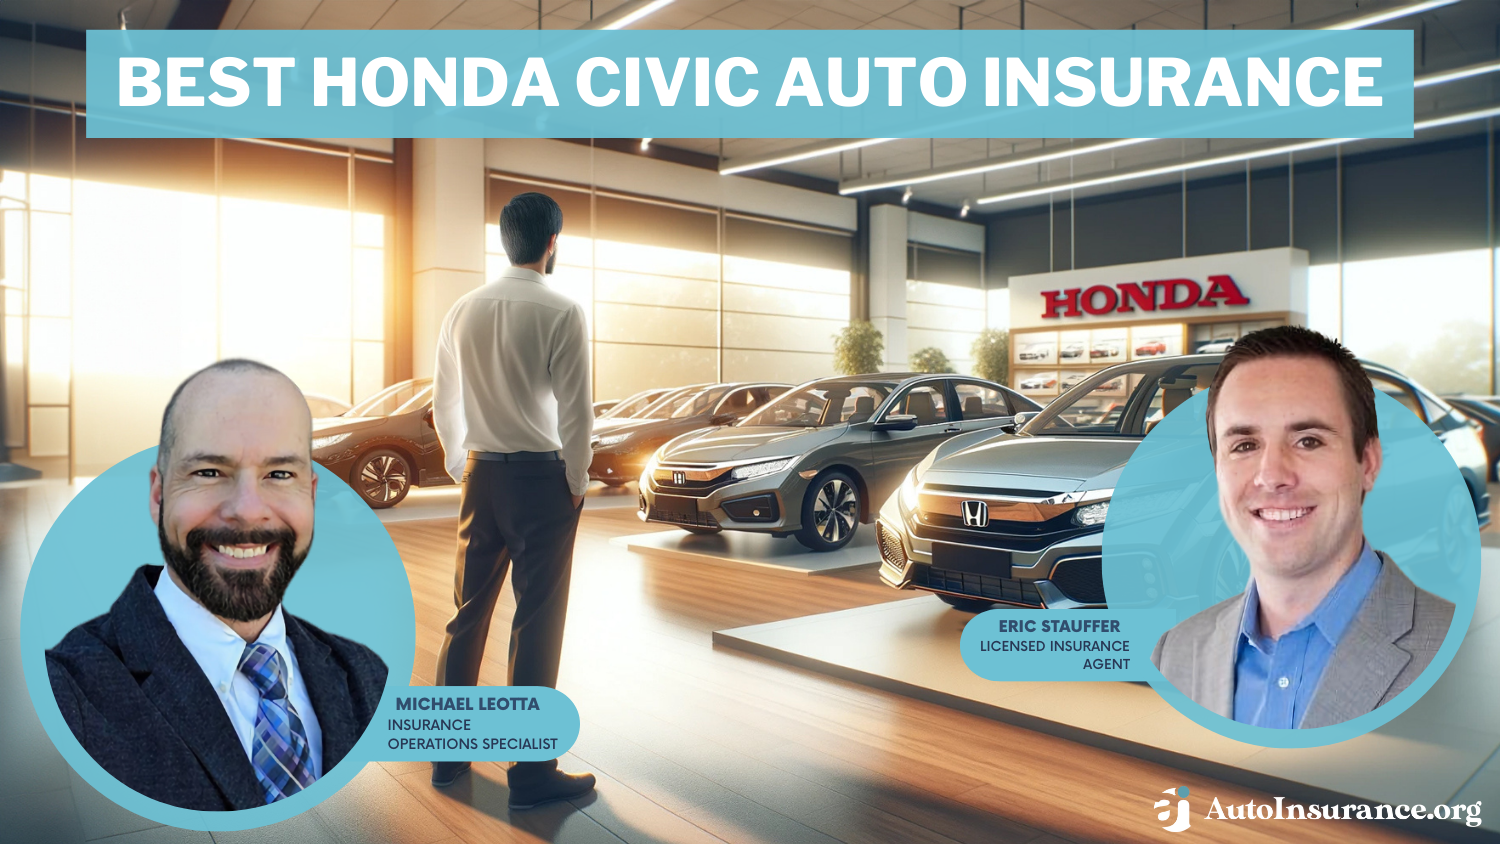 Best Honda Civic Auto Insurance